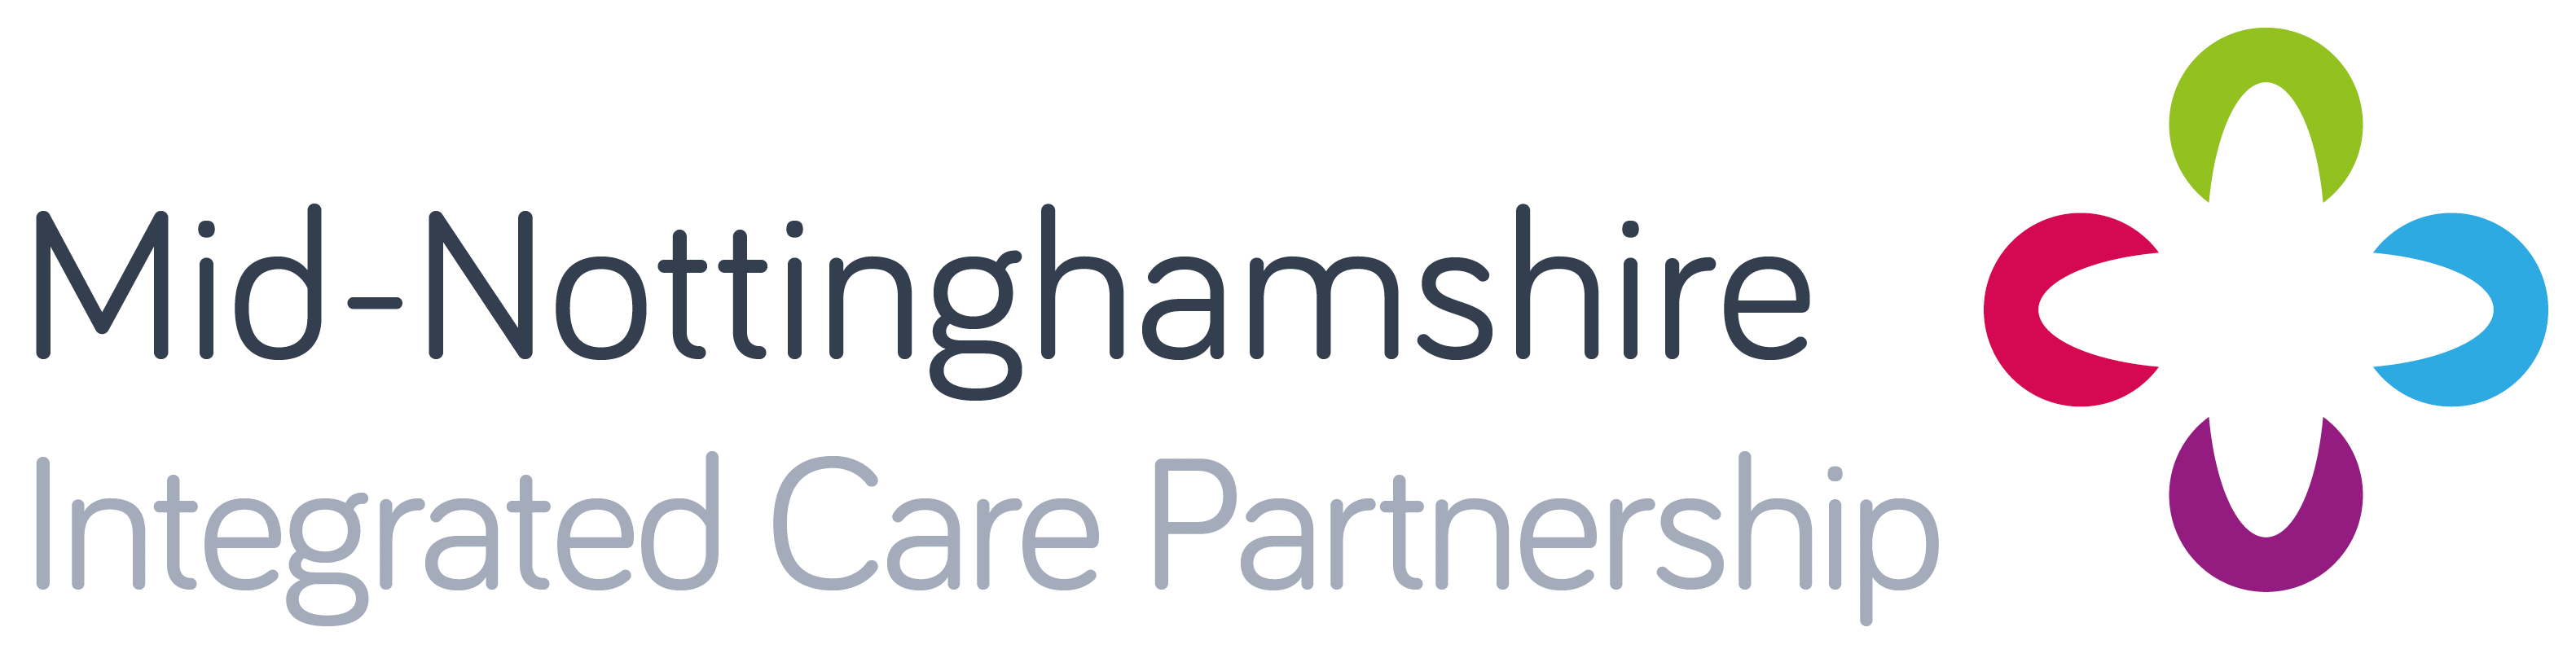 Mid-Nottinghamshire ICP Board logo